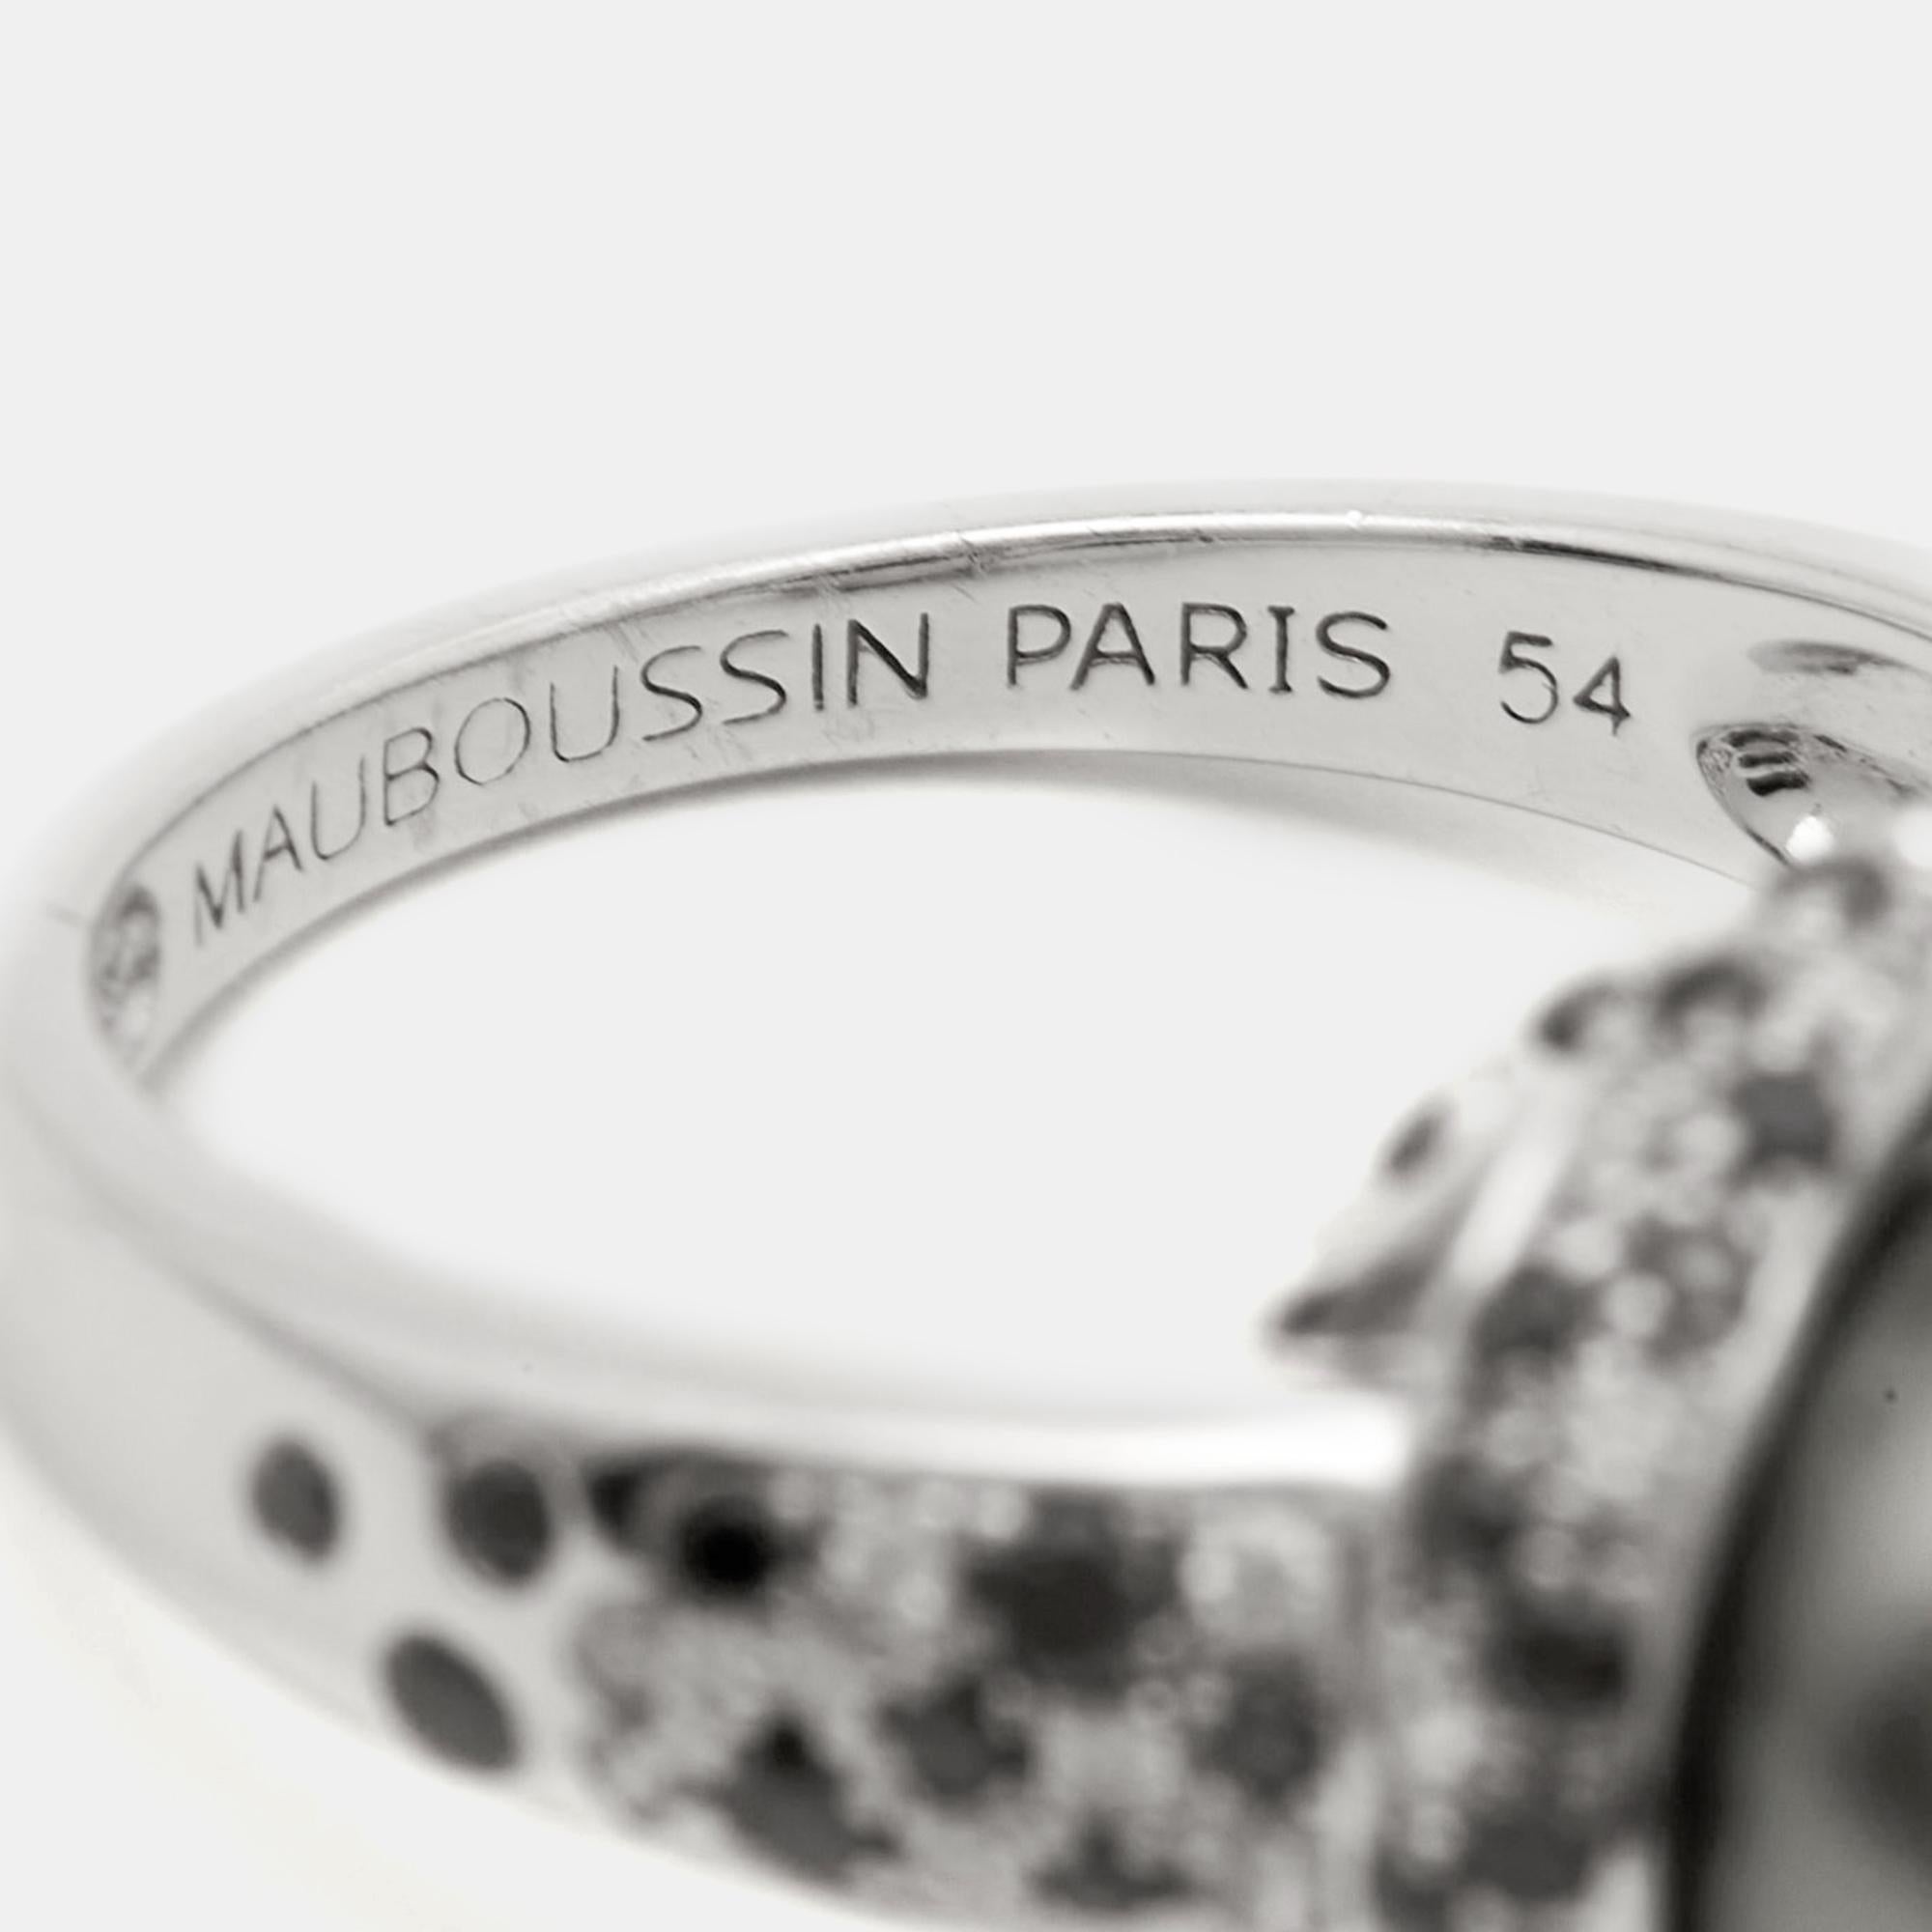 Mauboussin Perle Caviar Mon Amour Diamond 18K White Gold Cocktail Ring Size 54 1